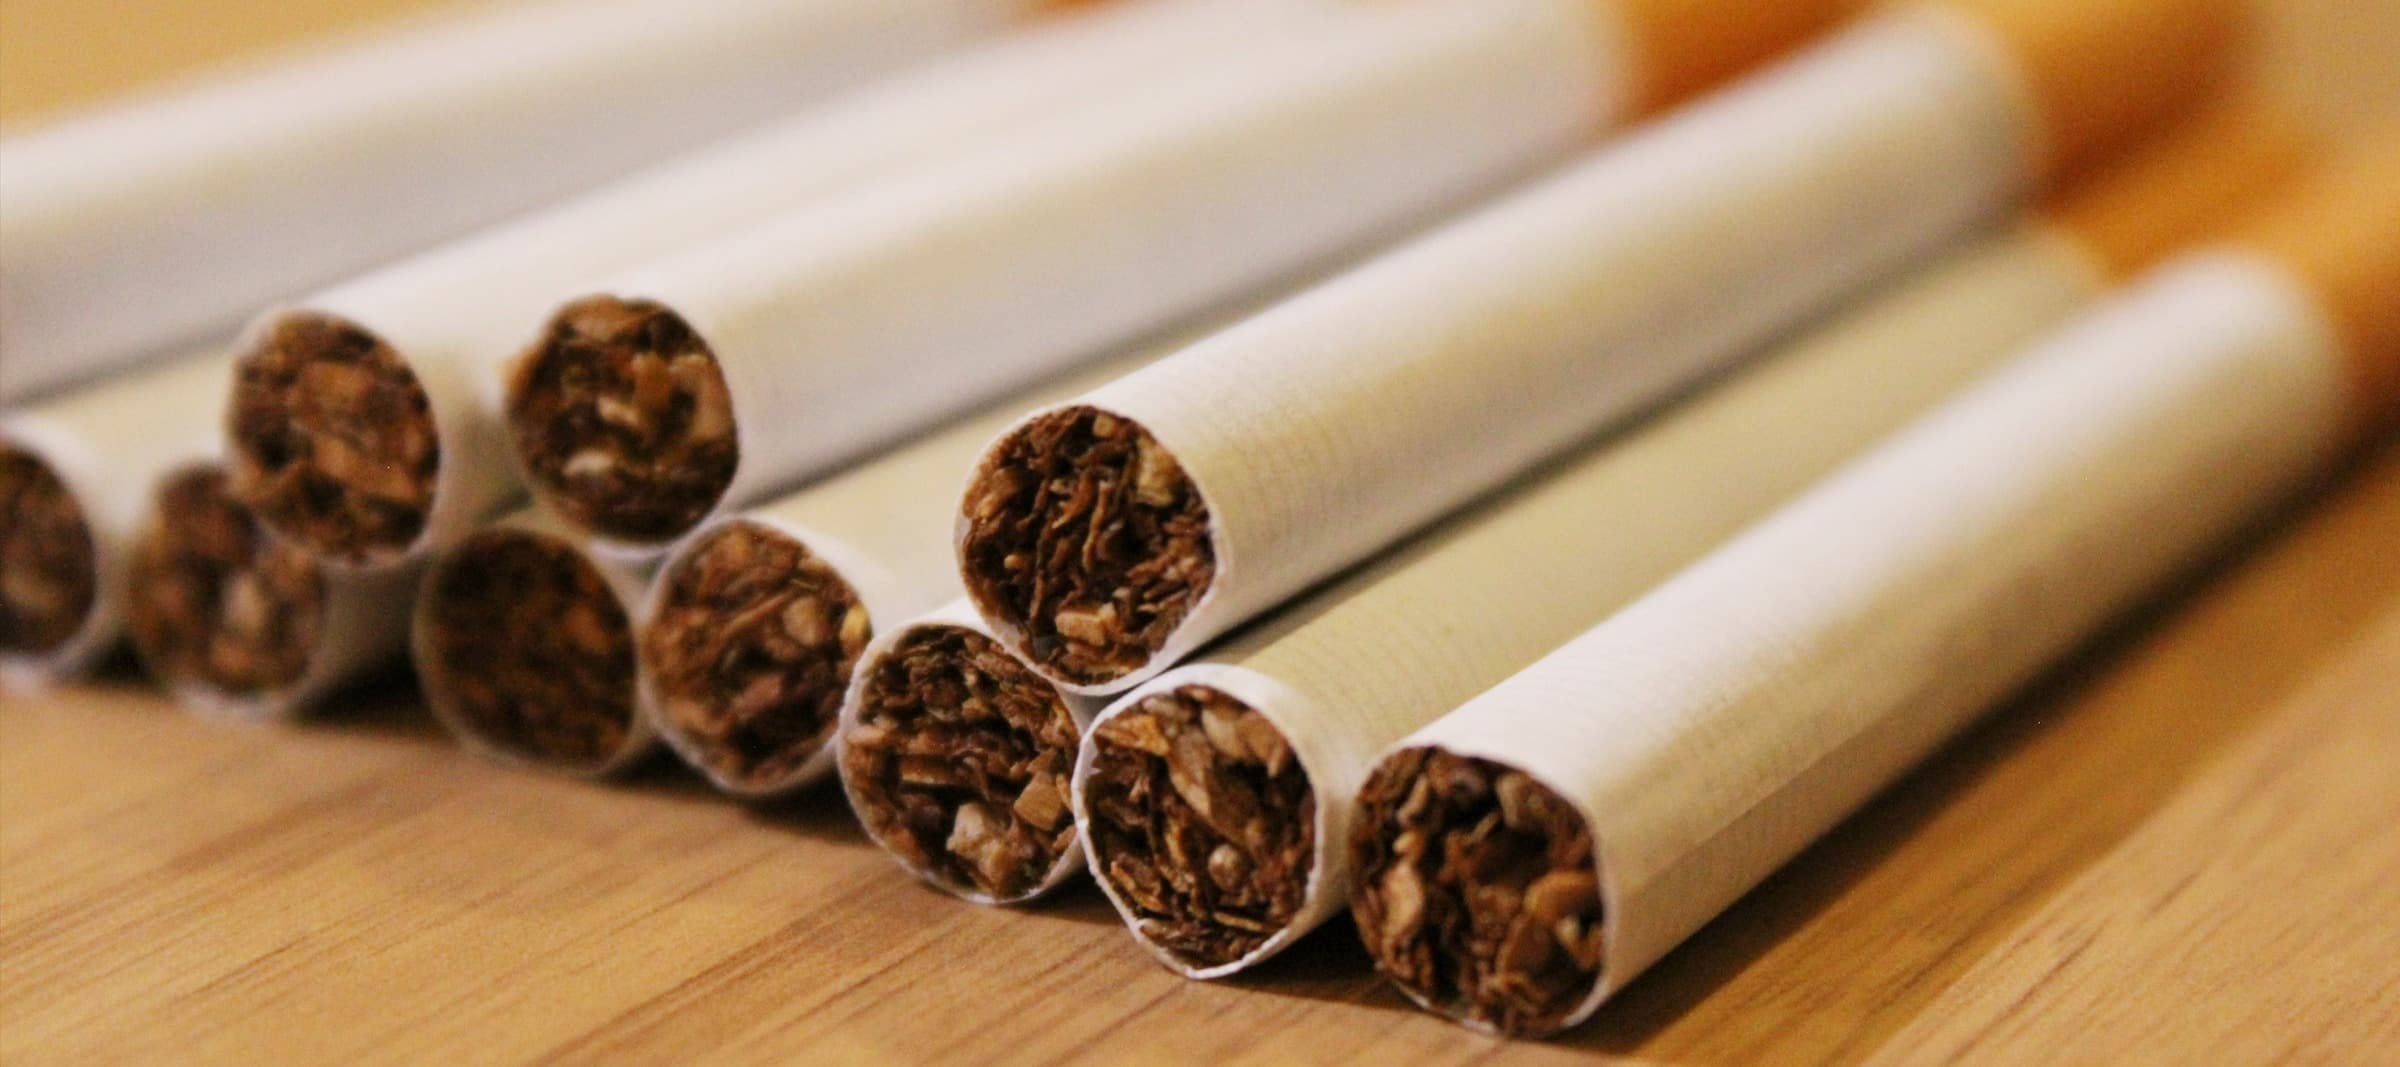 Фото новости: "Госдума приняла закон о дополнительном увеличении акцизов на табак"